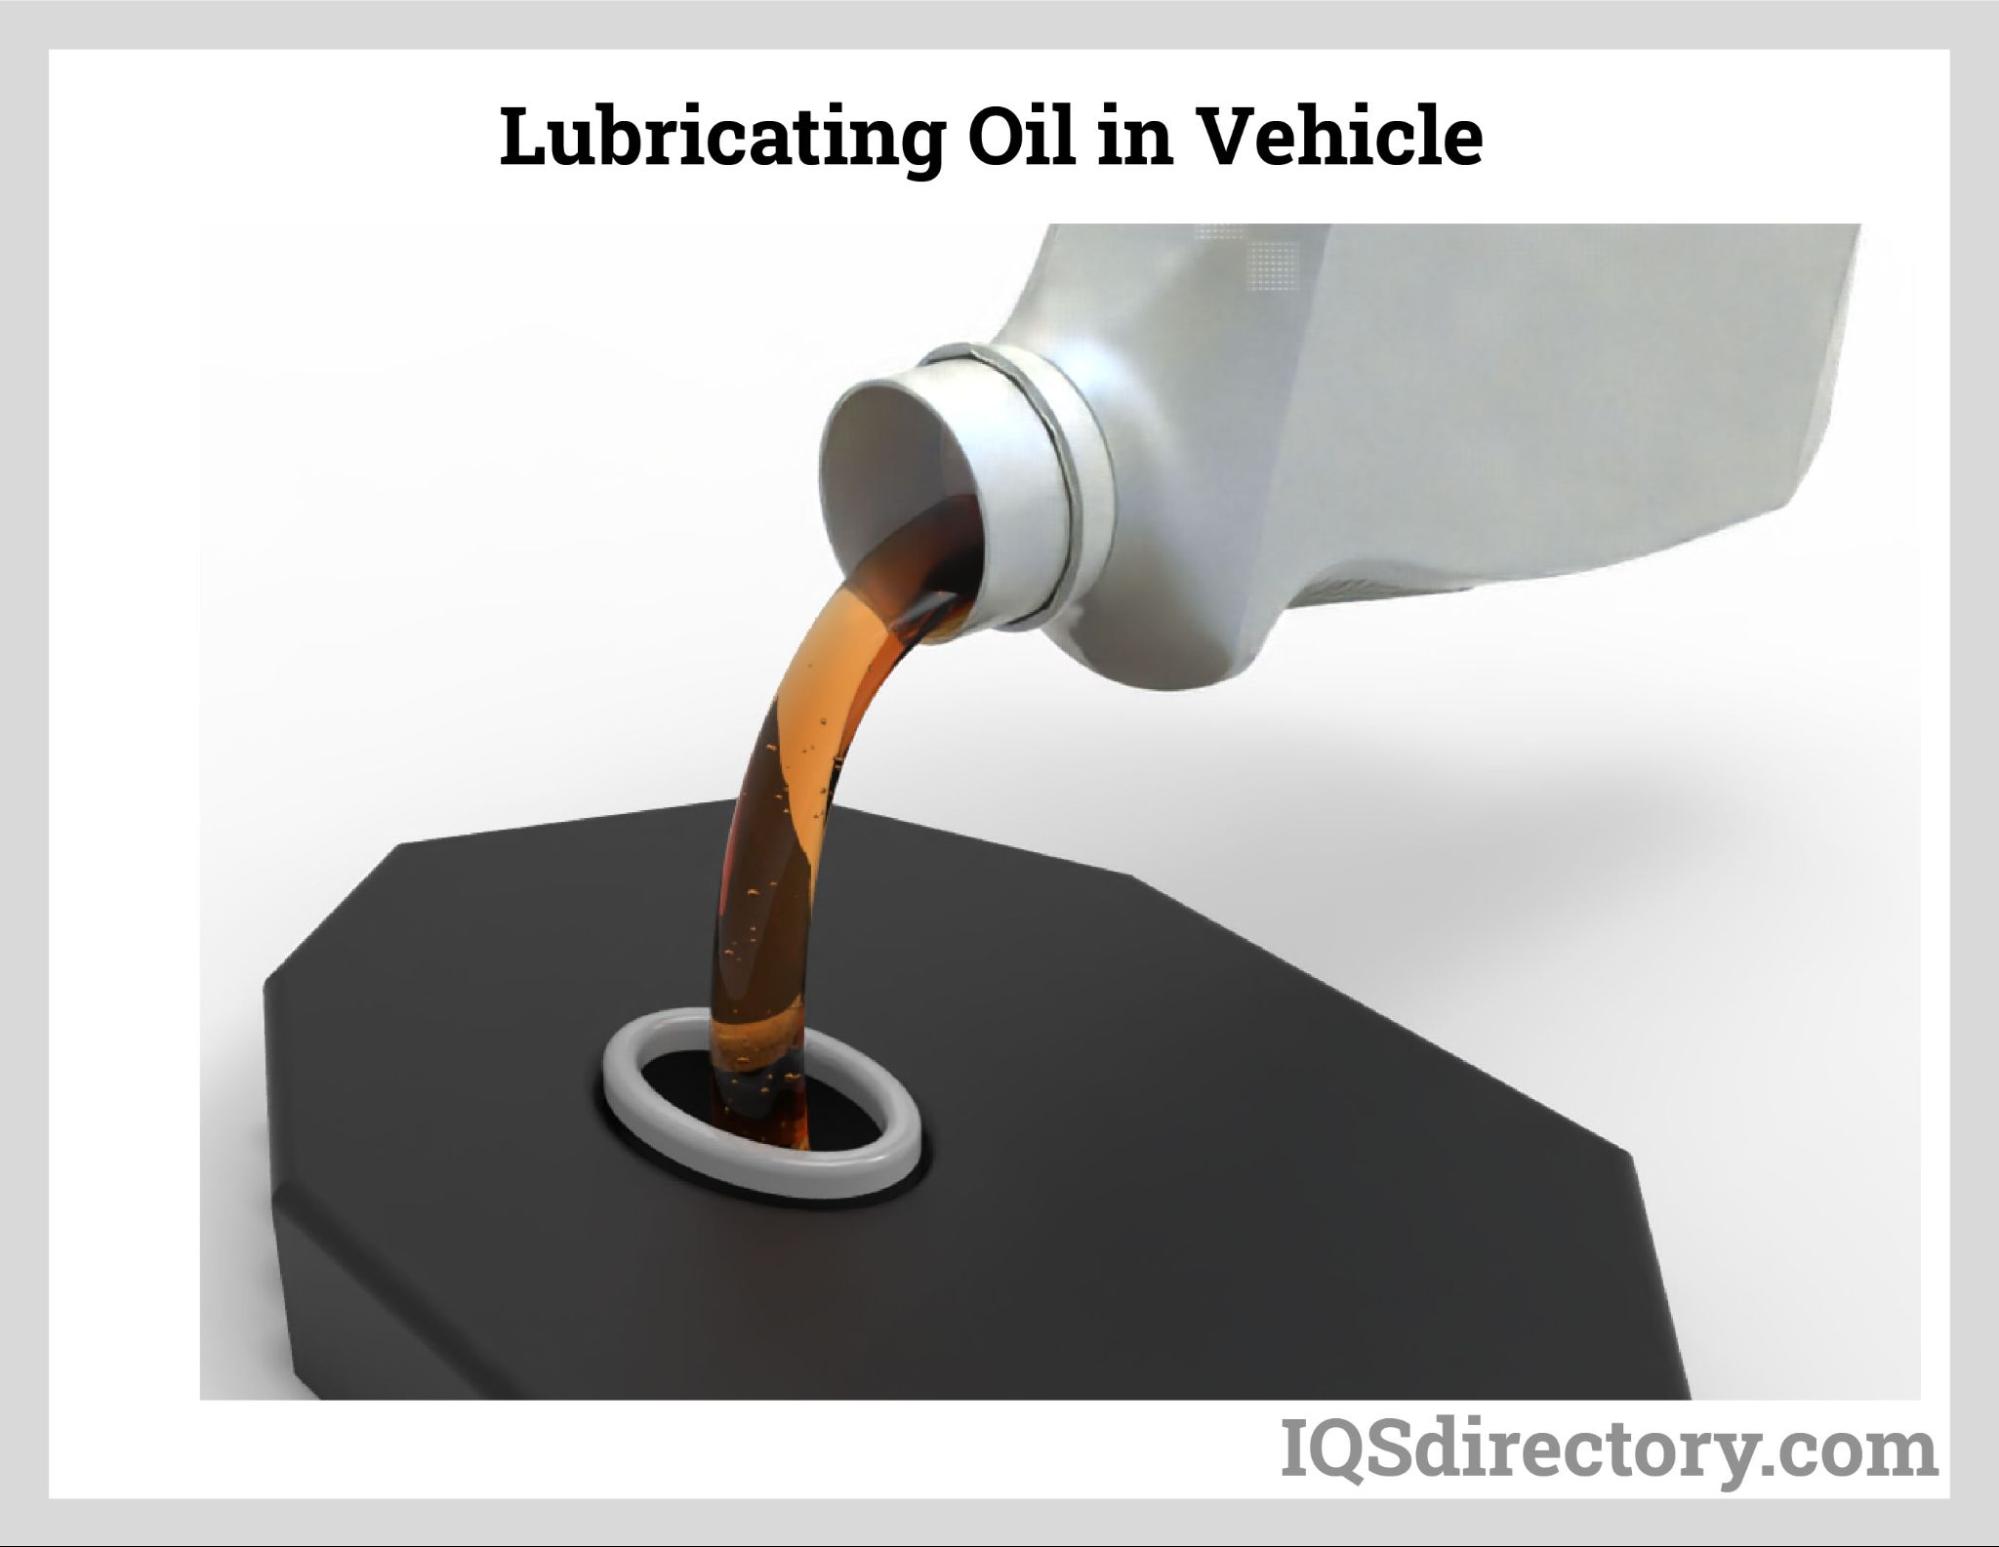 Lubricating Oil in Vehicle